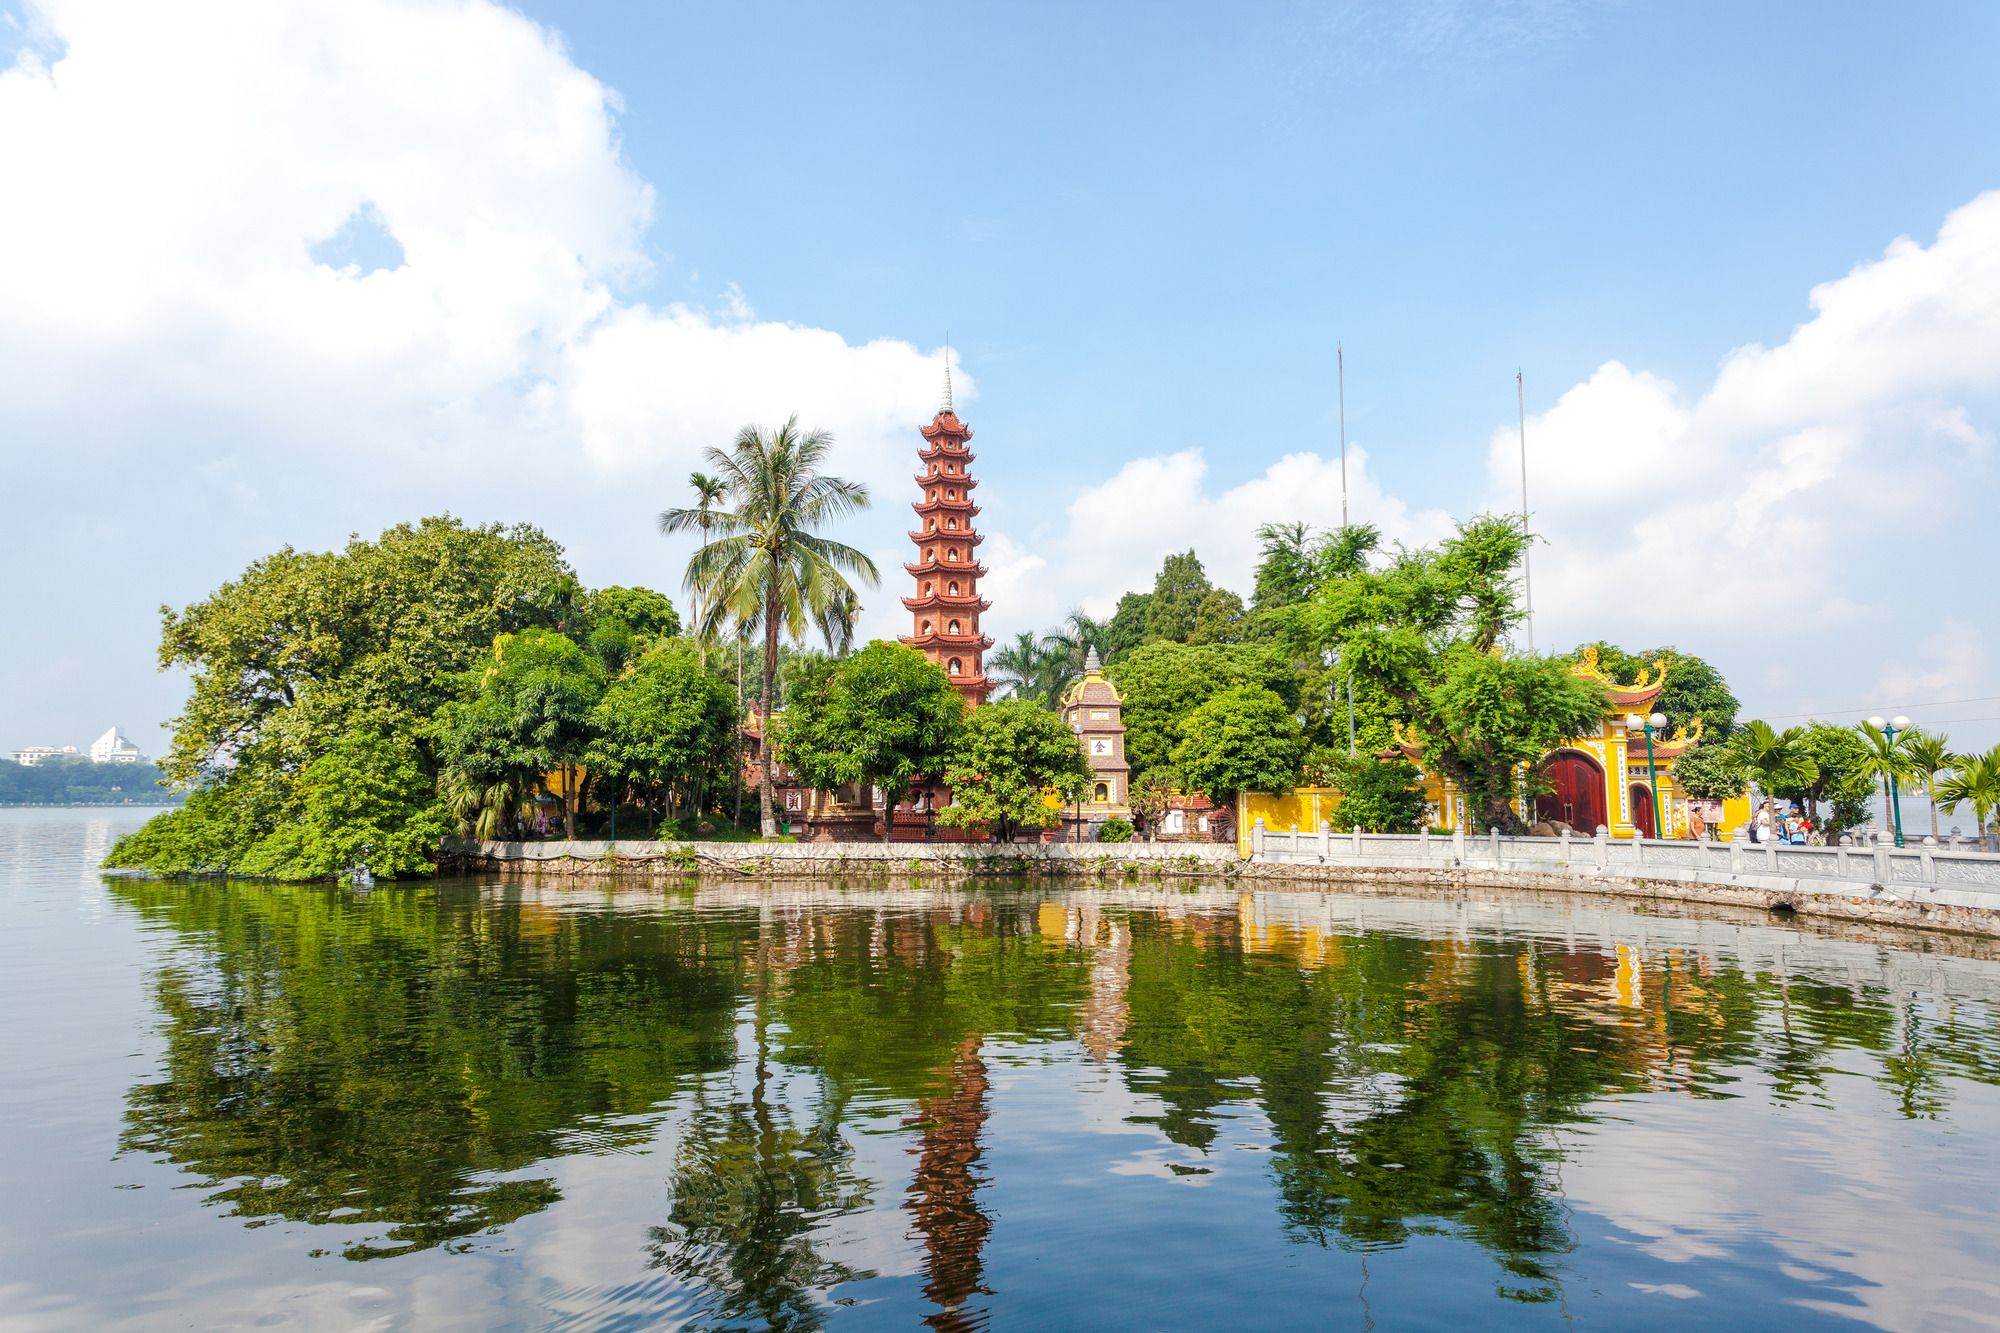 Hanoi - The capital of Vietnam